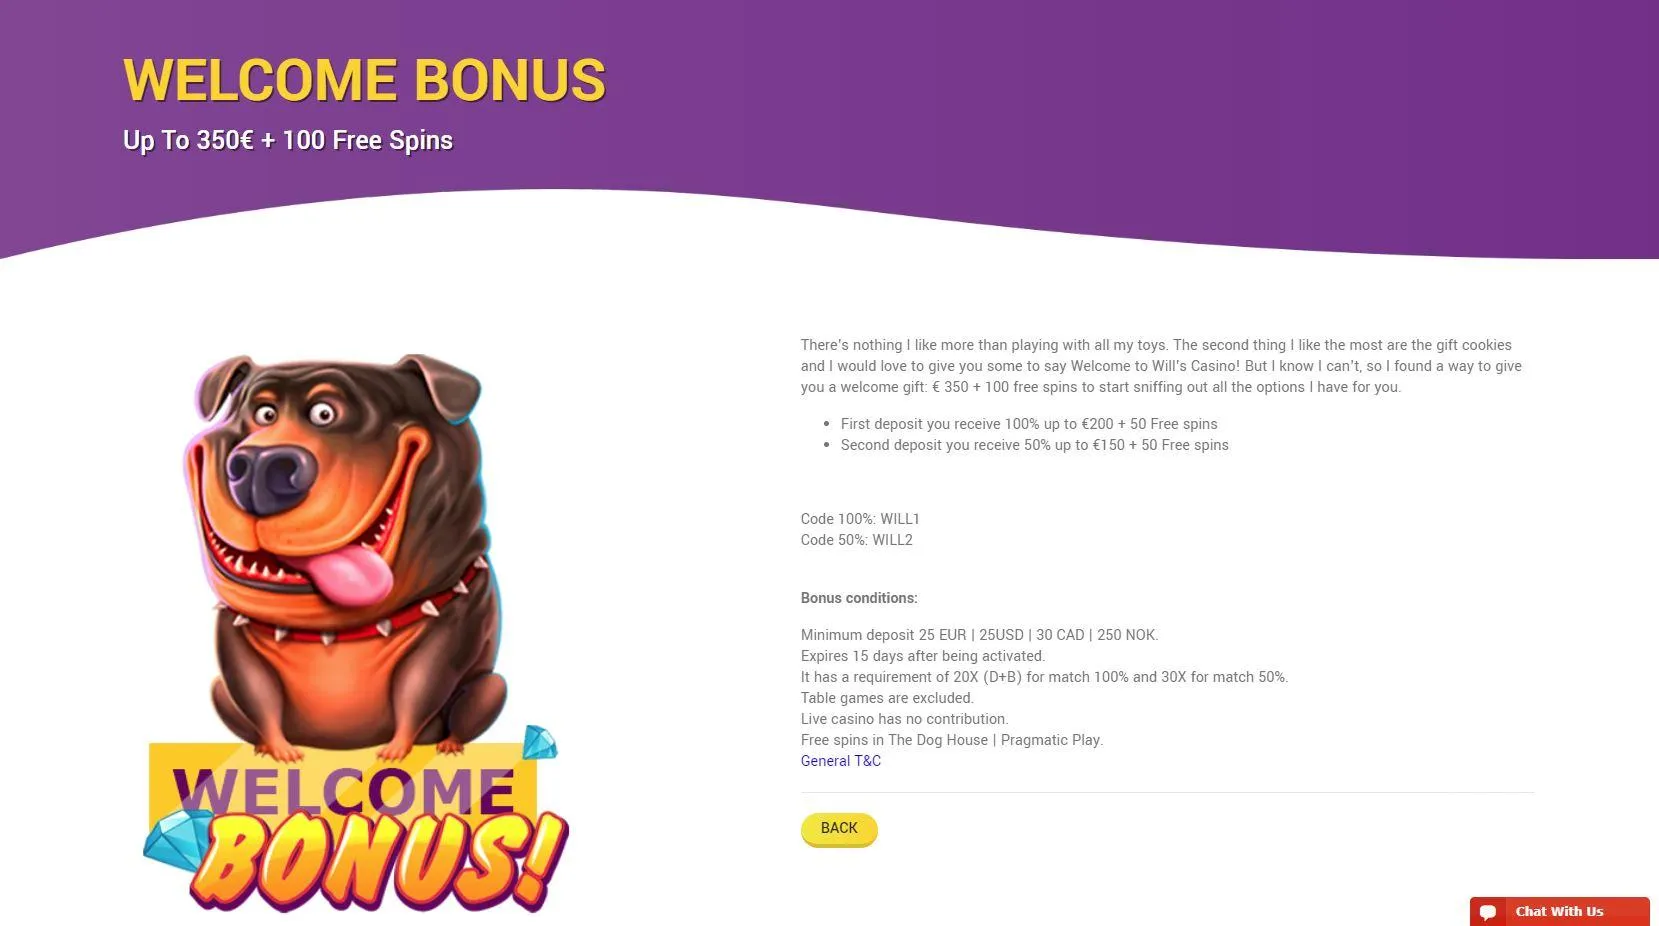 will's casino welcome bonus irish online casinos welcome bonus promo codes